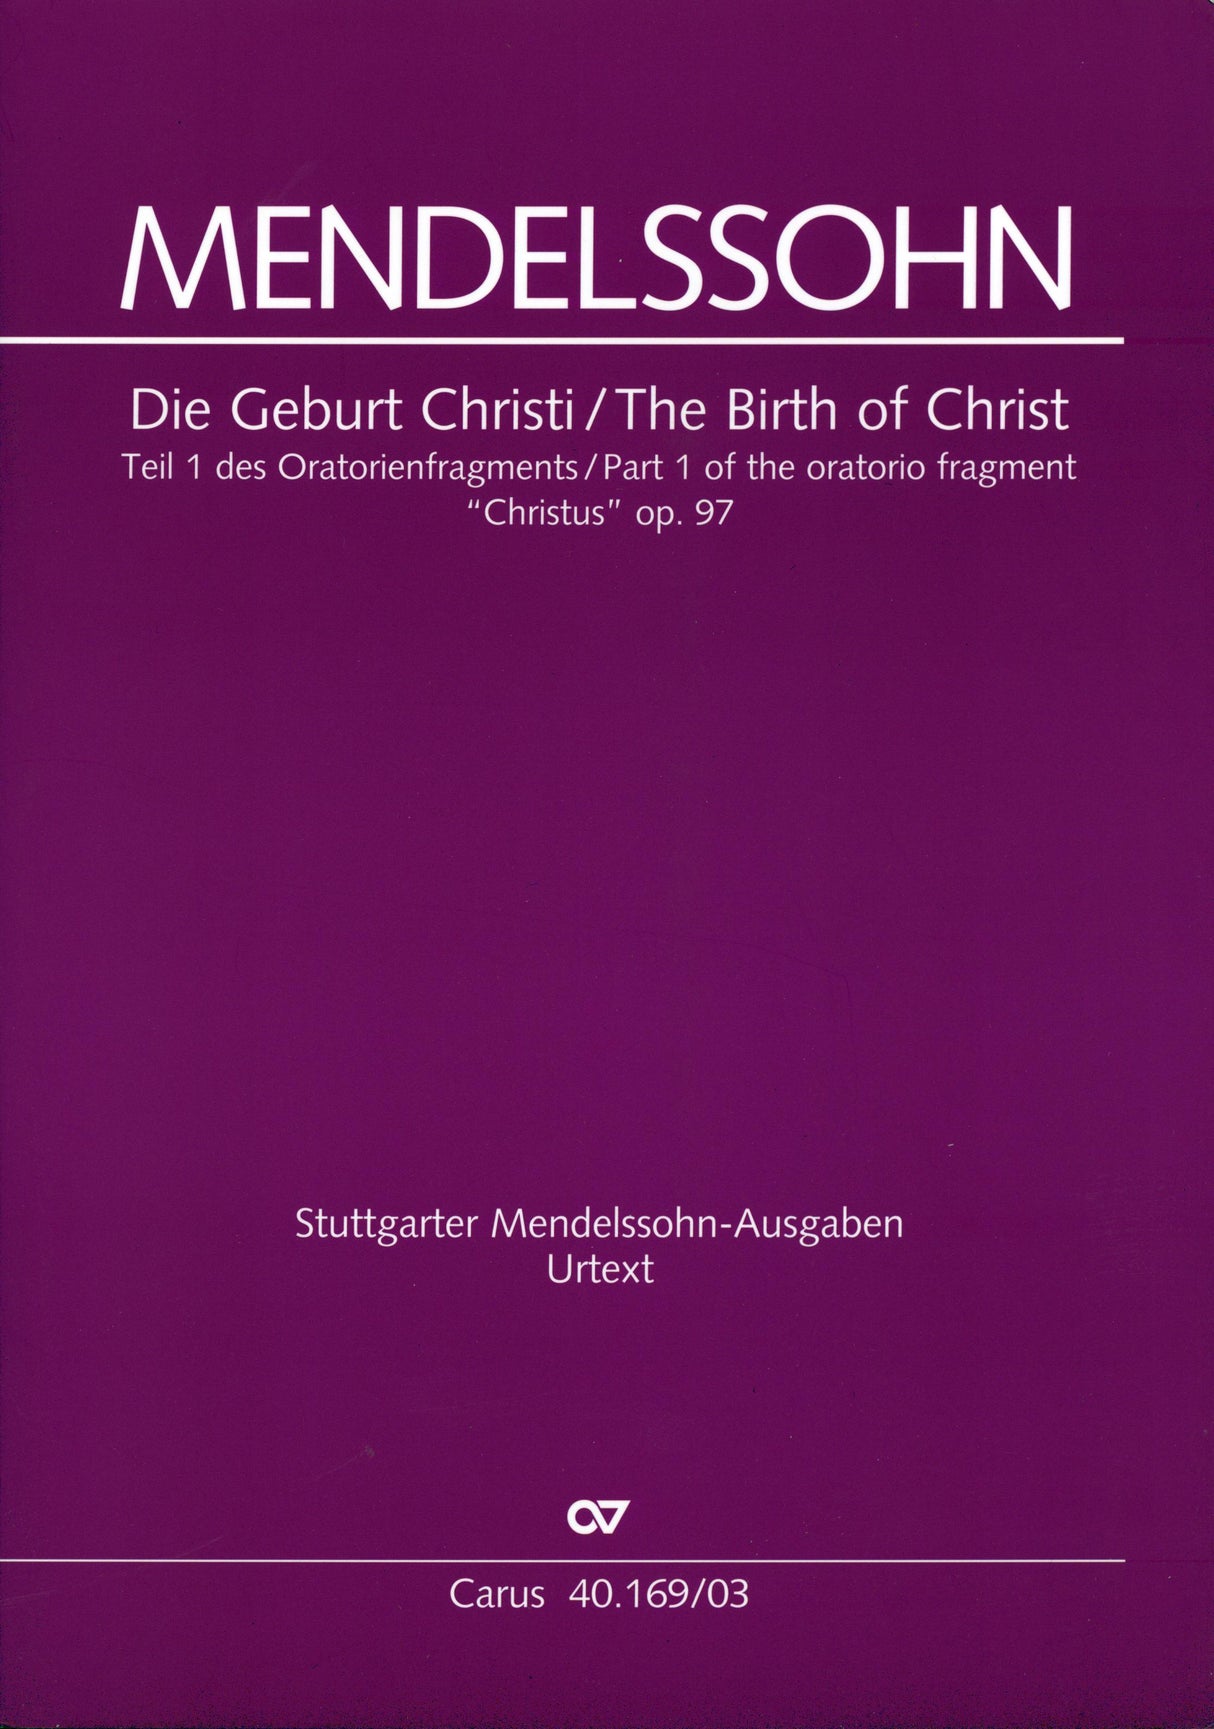 Mendelssohn: The Birth of Christ (Die Geburt Christi)